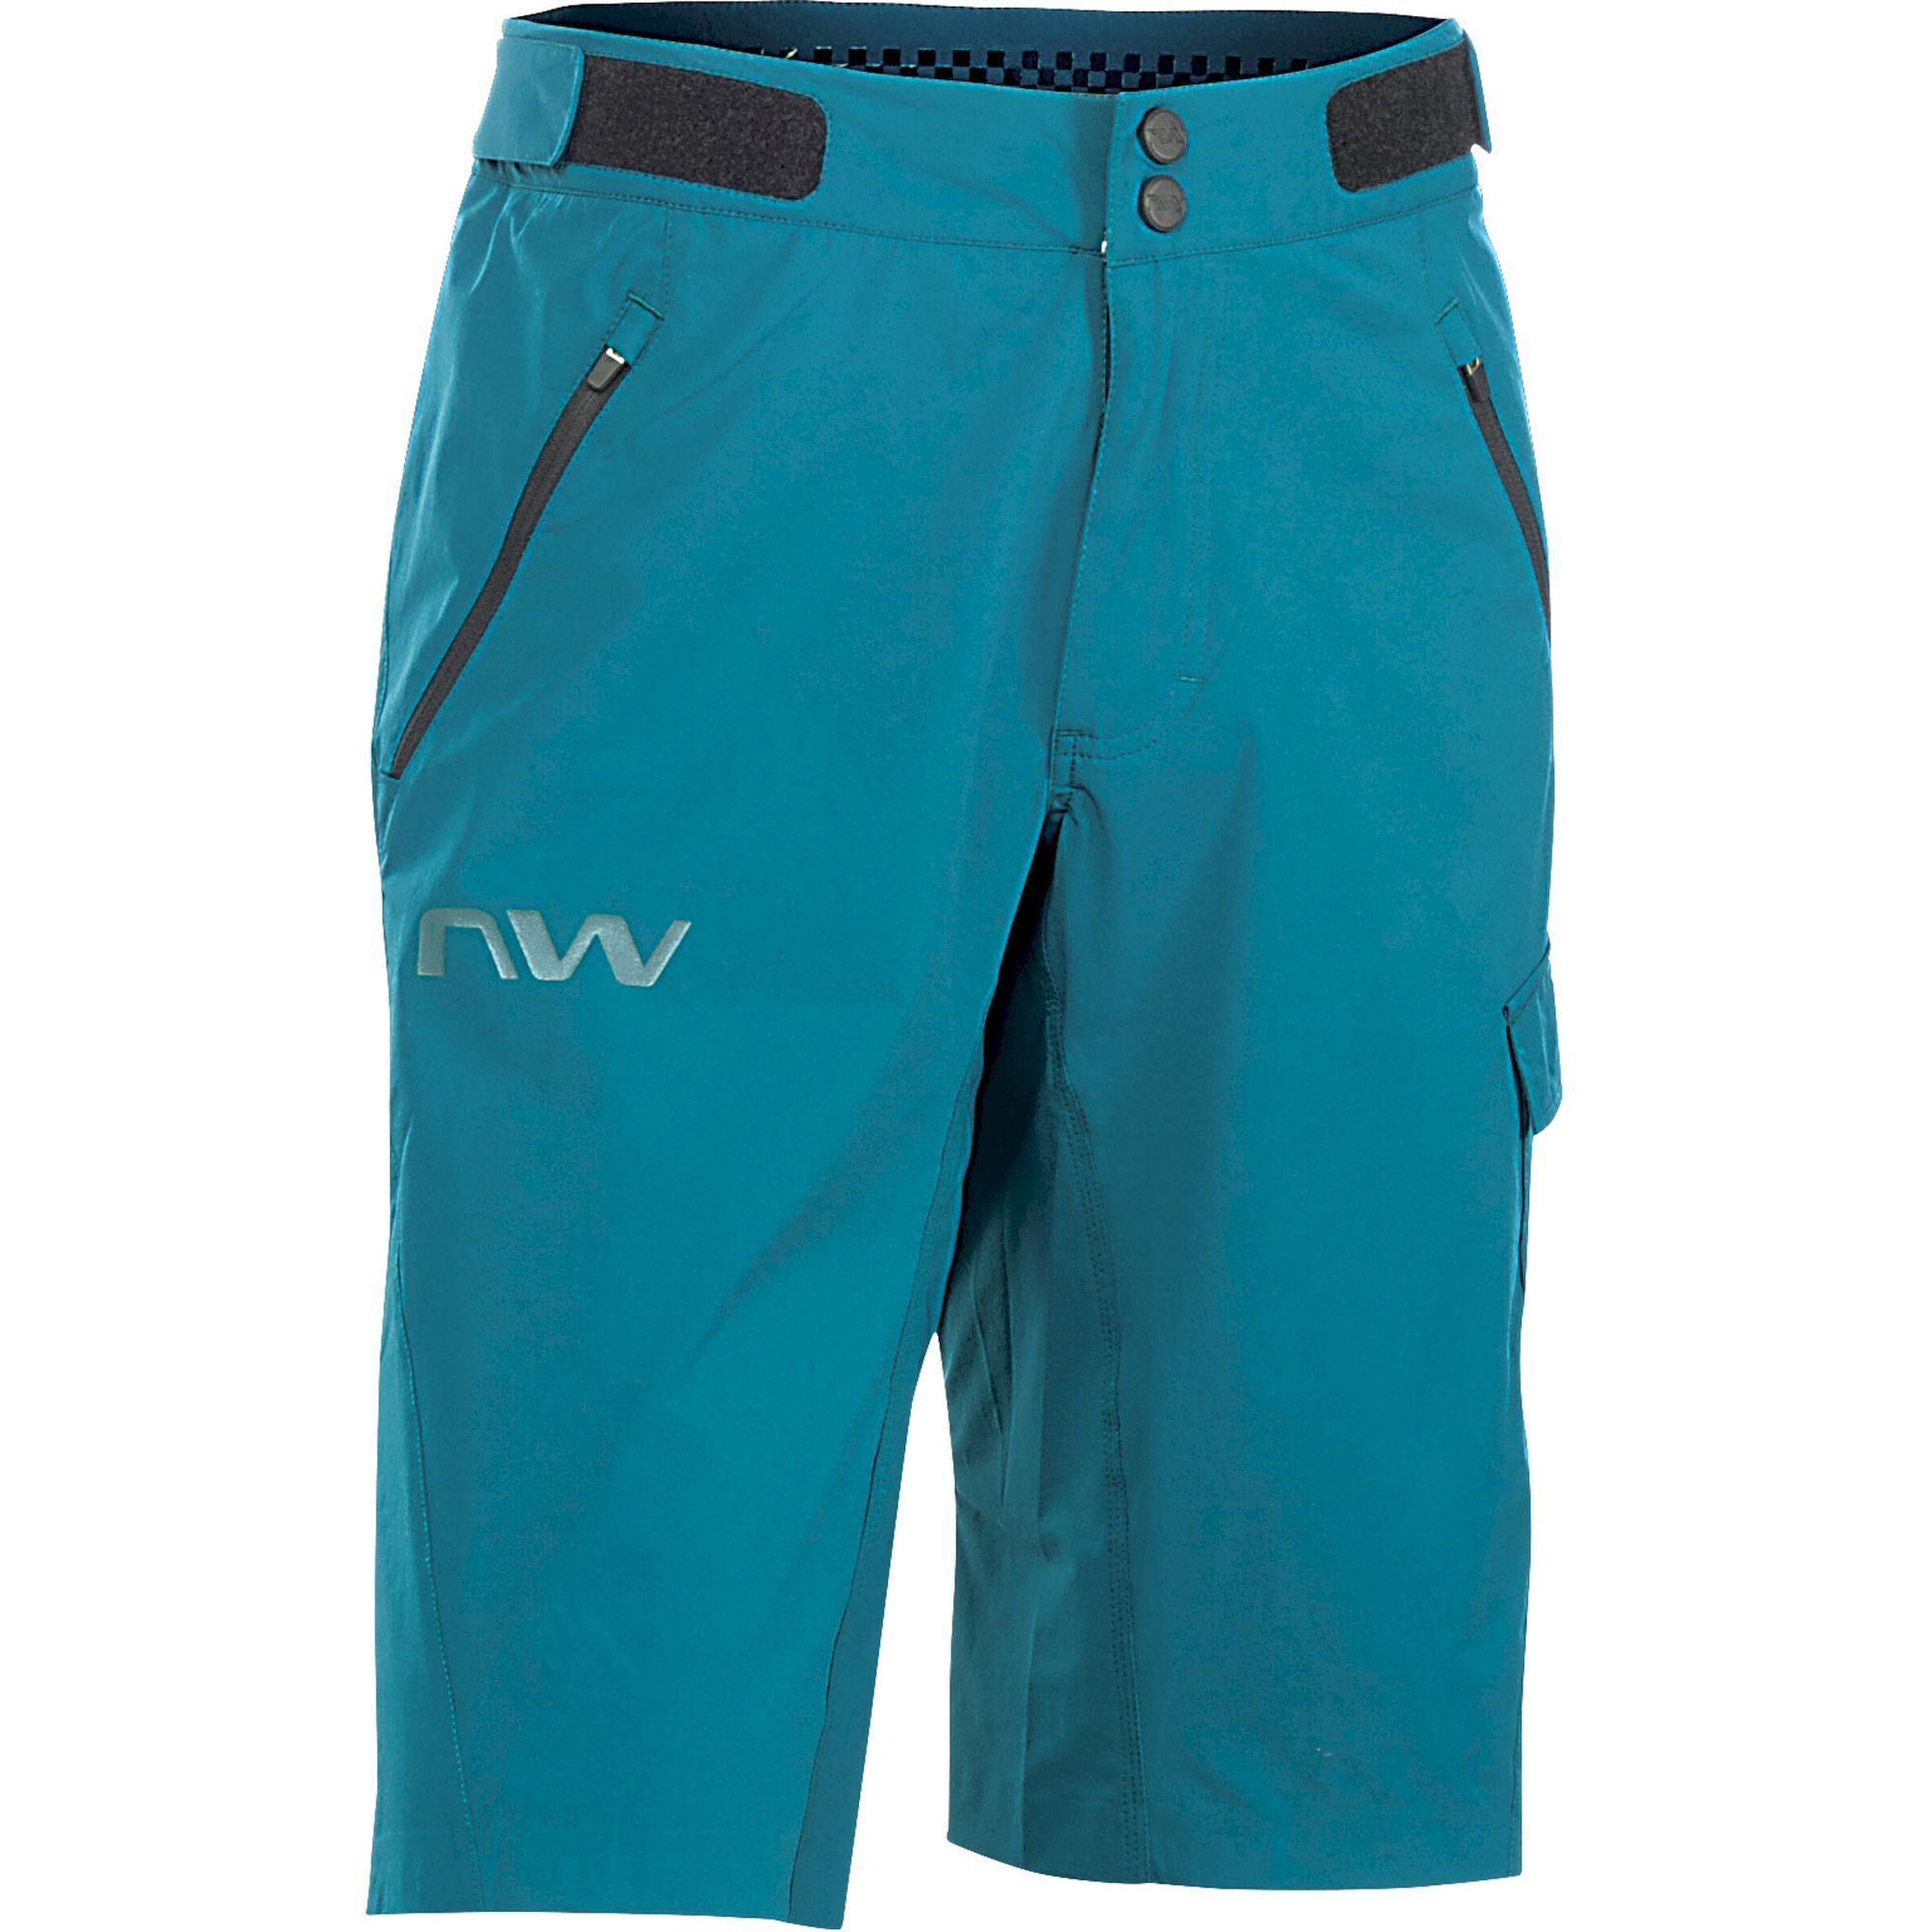 Northwave Edge Baggy - MTB shorts - Men's